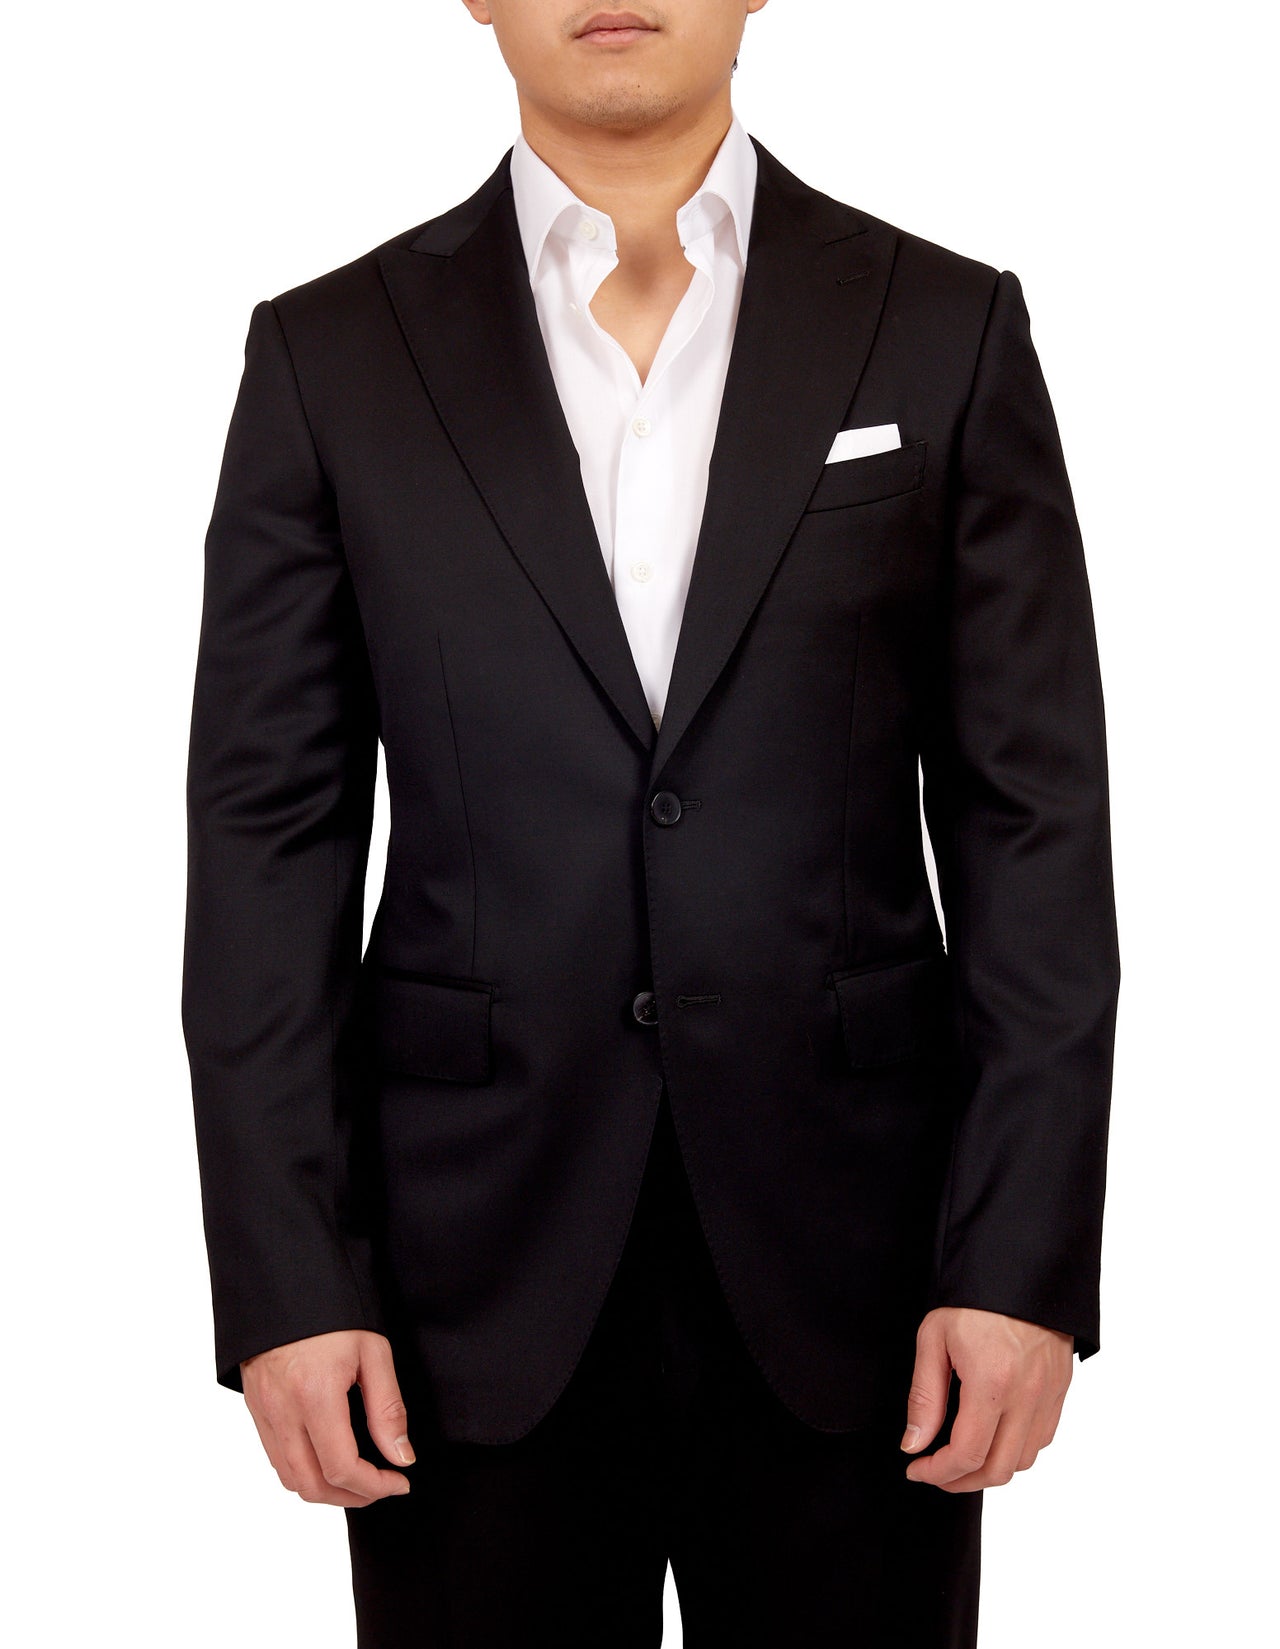 HENRY SARTORIAL Graduate Peak Lapel Suit BLACK LG